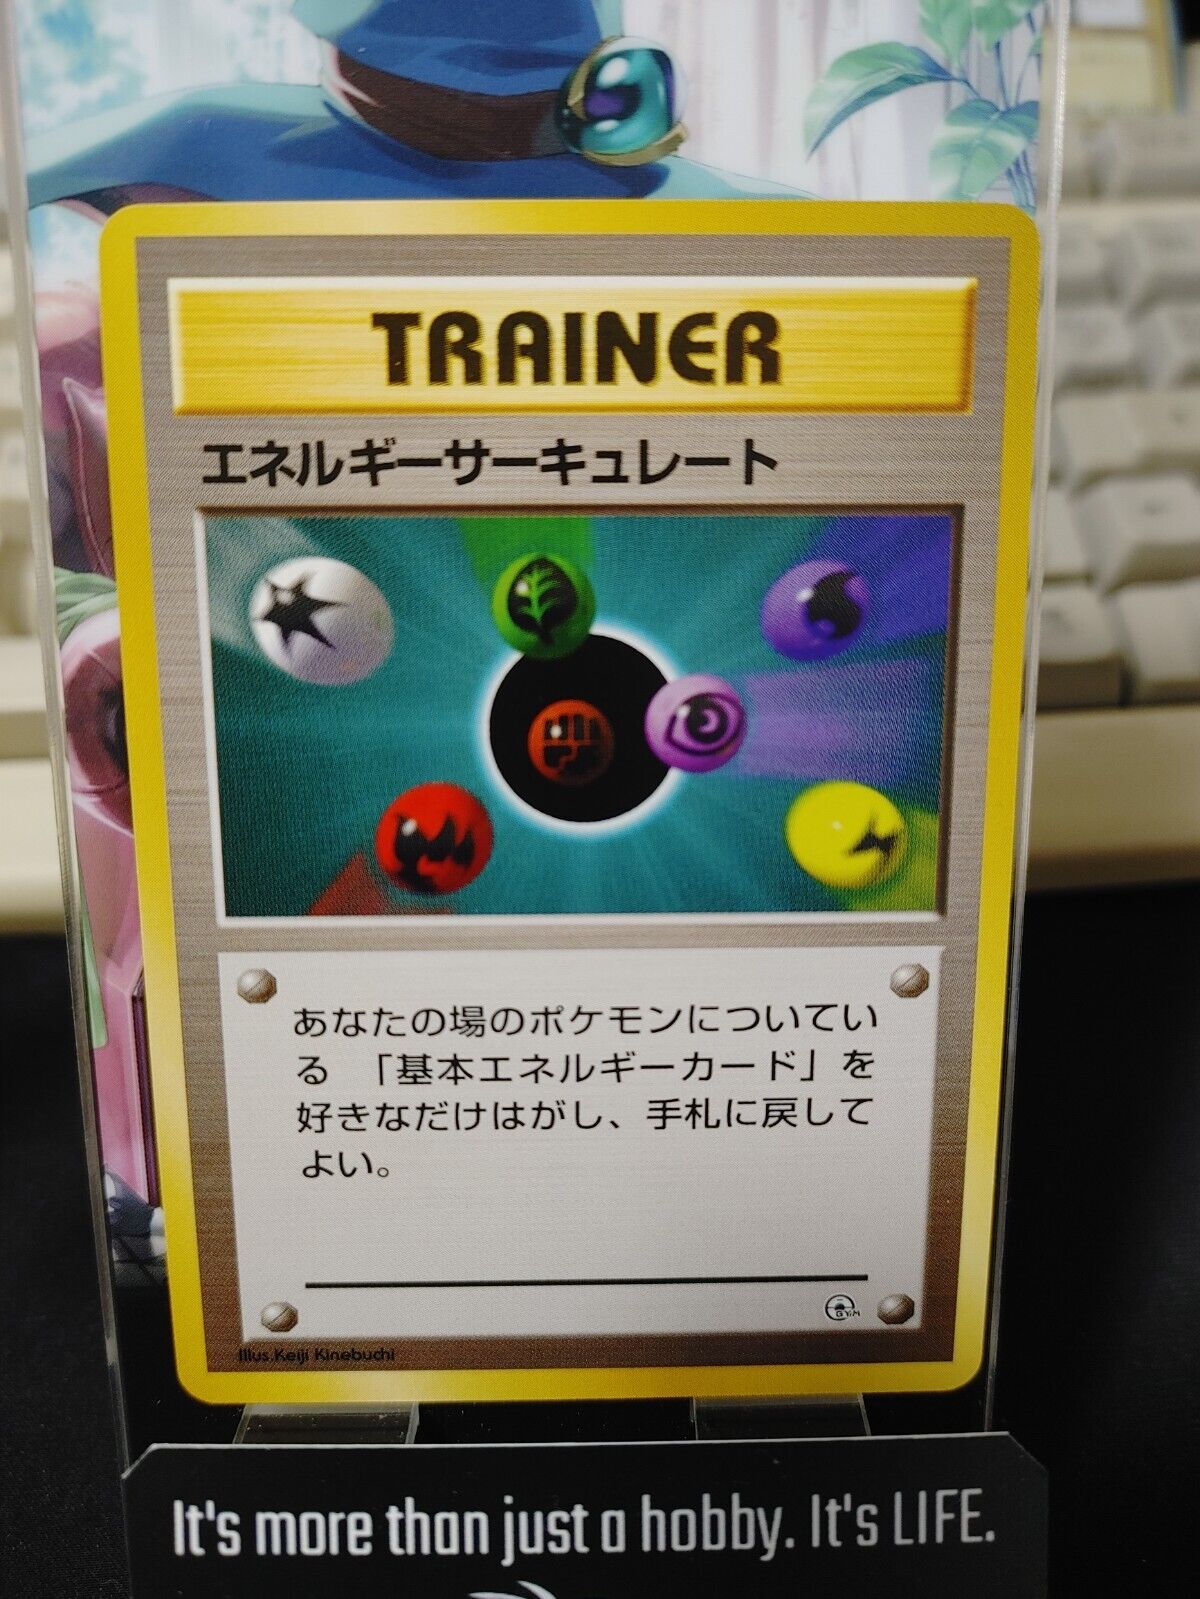 Energy Flow Trainer Pokemon Secret Mission Japanese Vintage Card Japan Original